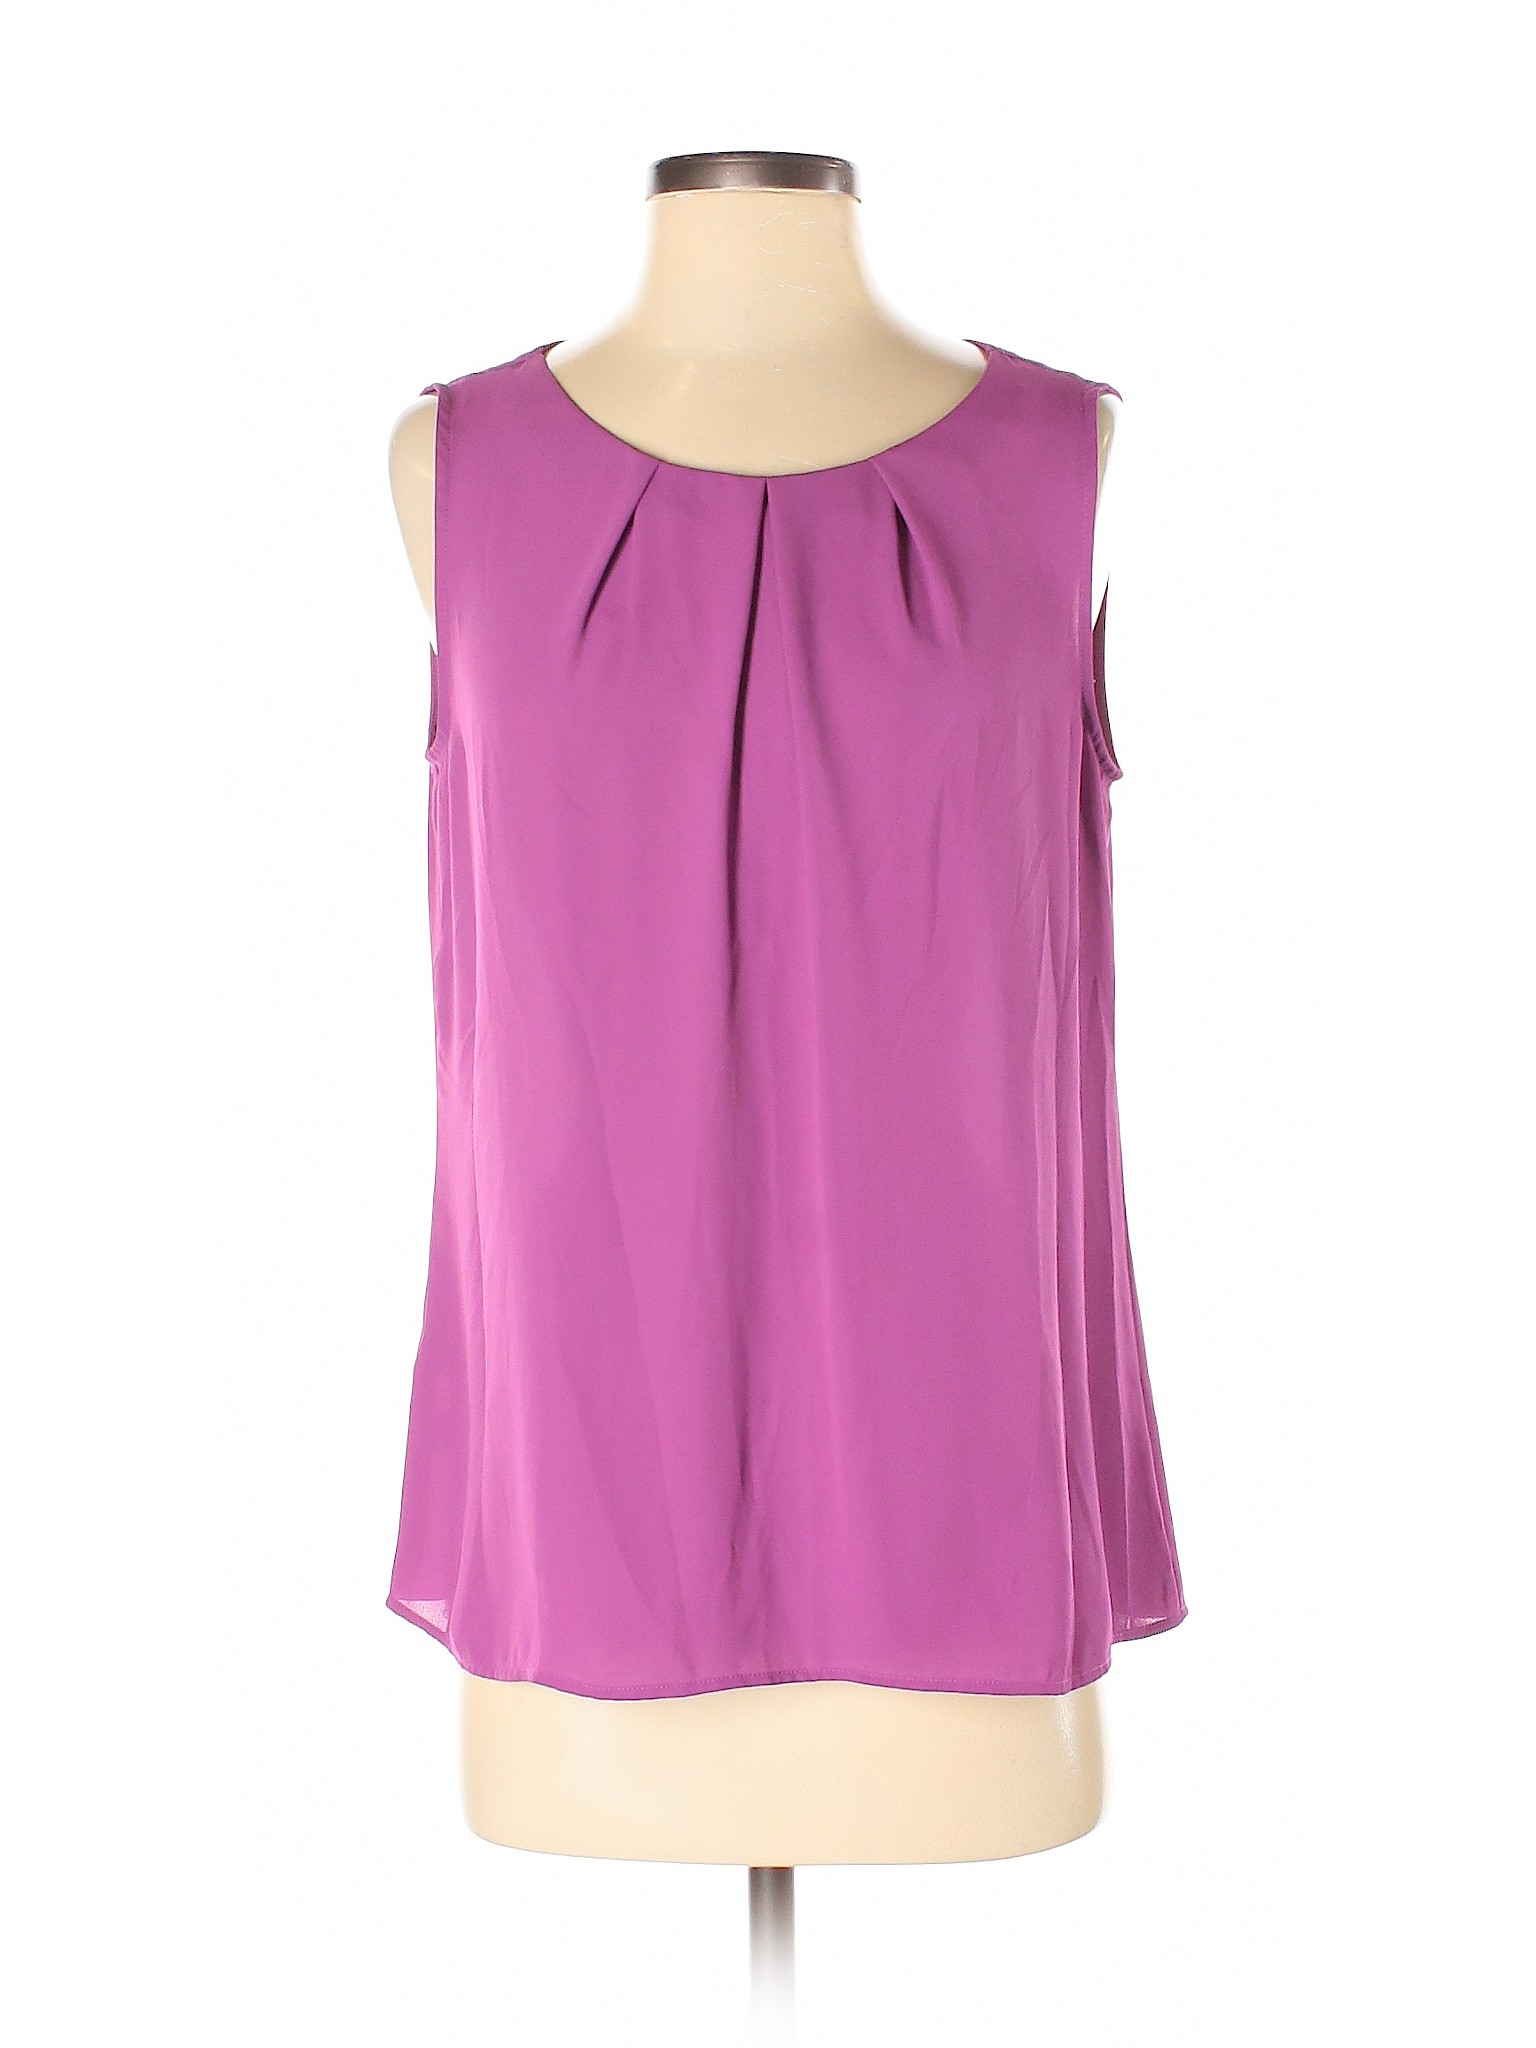 Ann Taylor LOFT Outlet Women Purple Sleeveless Blouse S | eBay